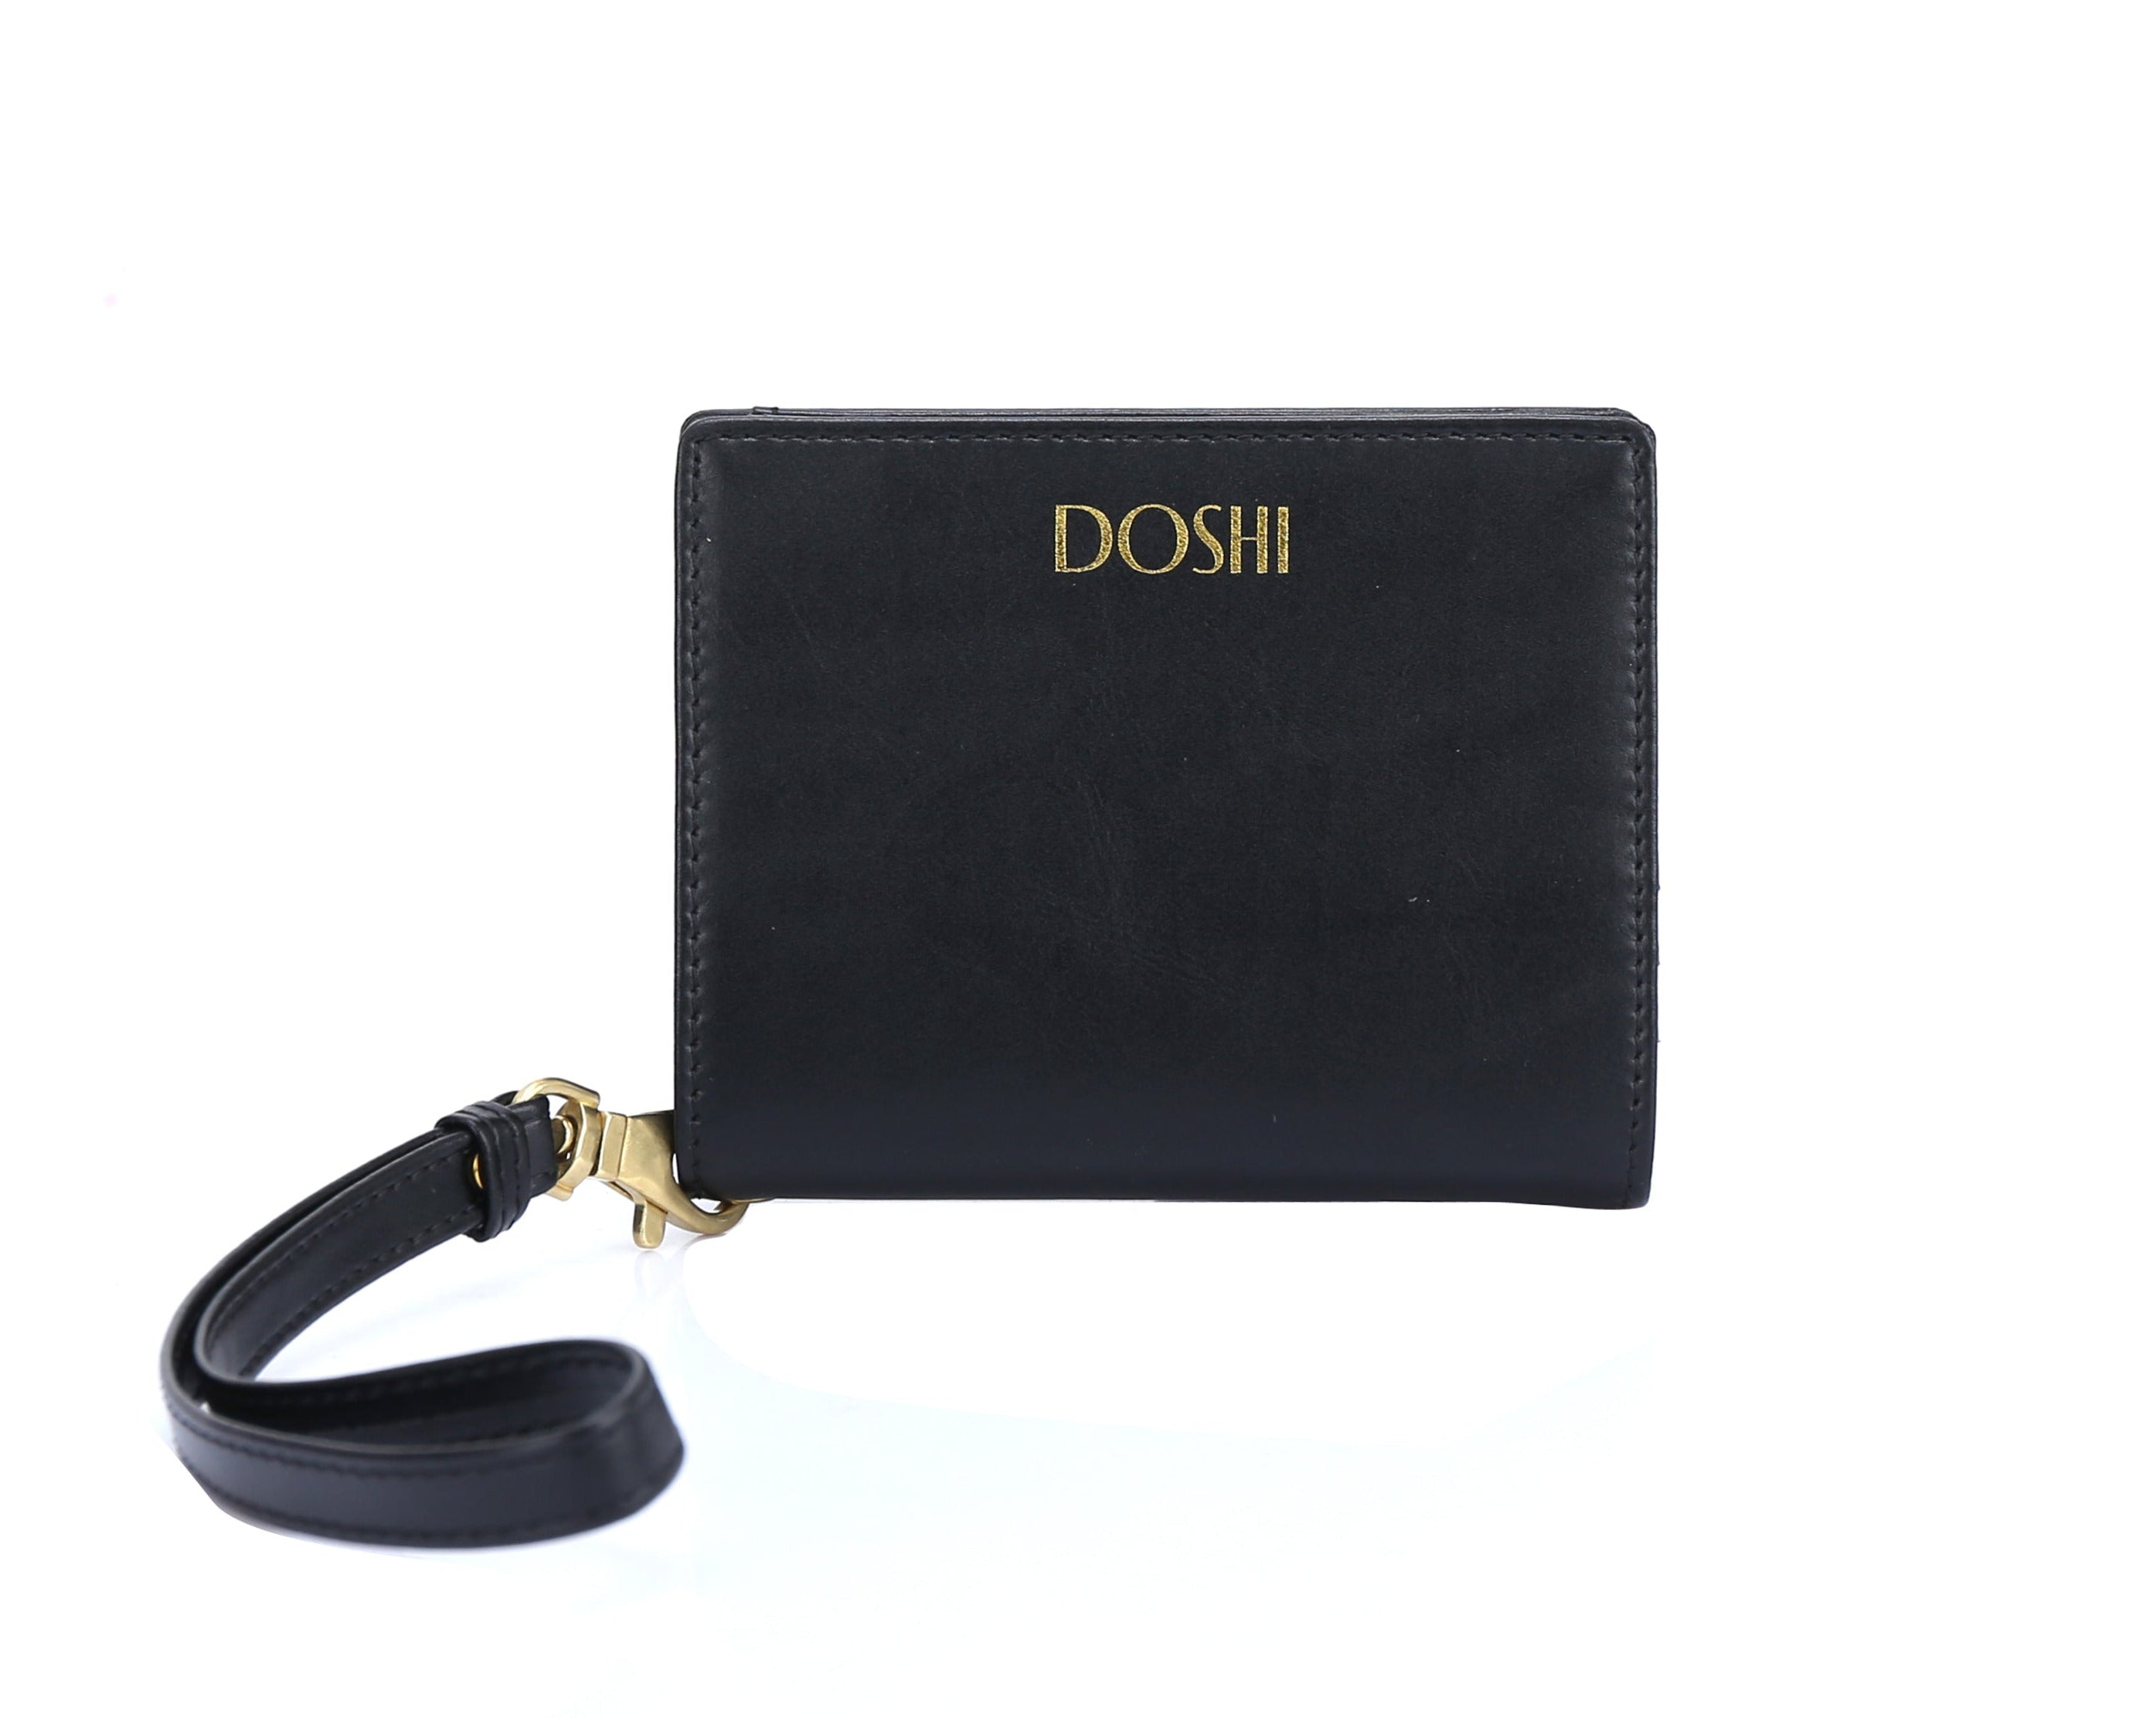 black bigger wallet. double zipper. many slots for... - Depop